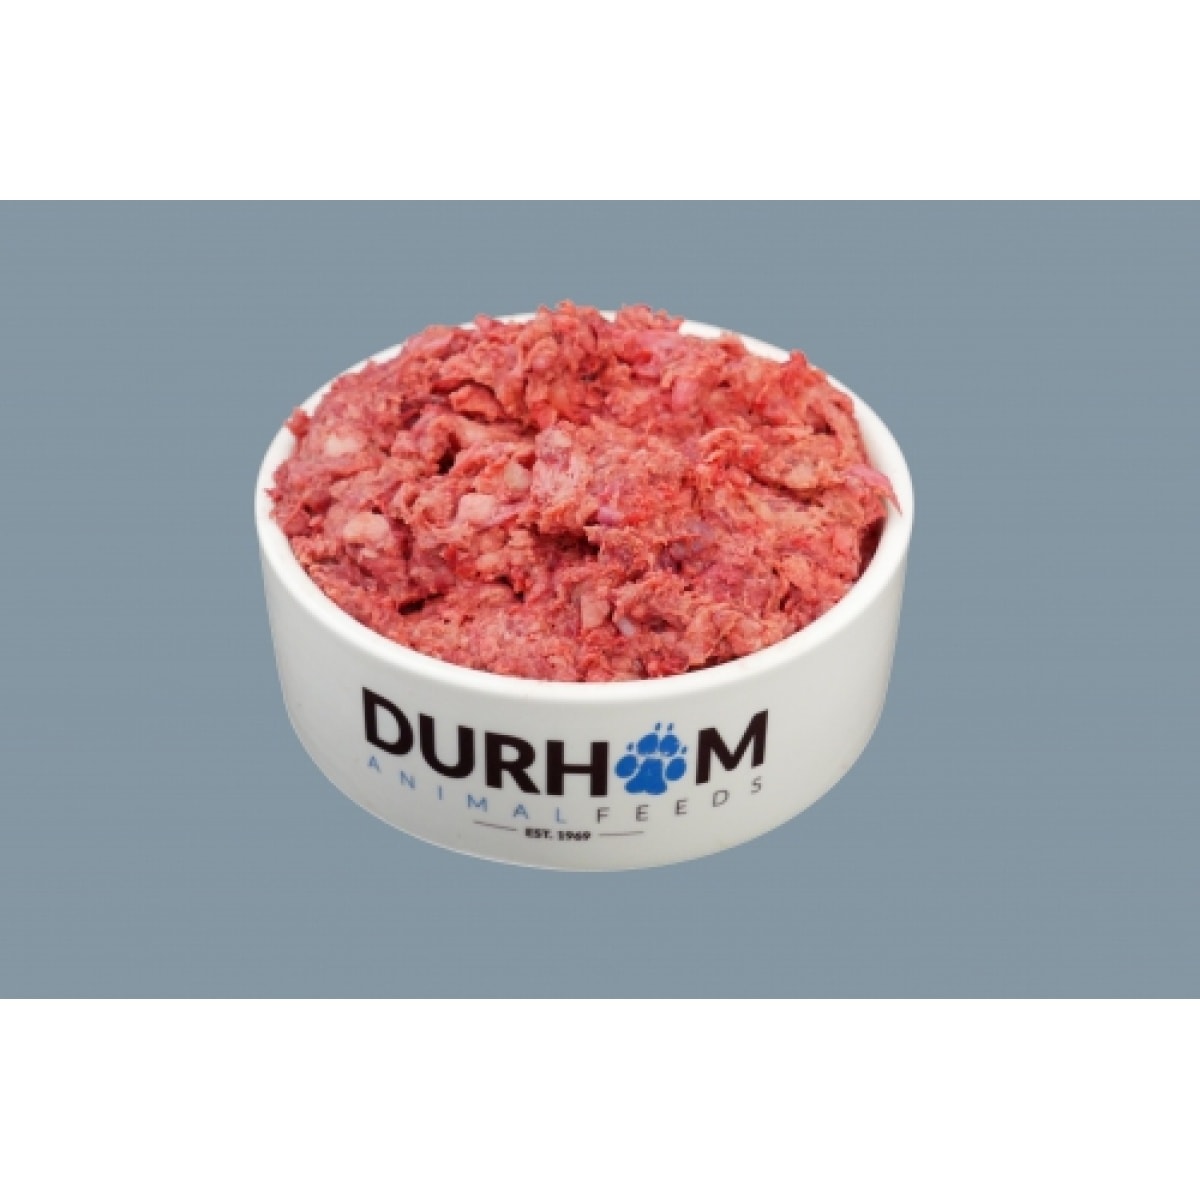 DAF – Lamb Mince 454g – Pawfect Supplies Ltd Product Image